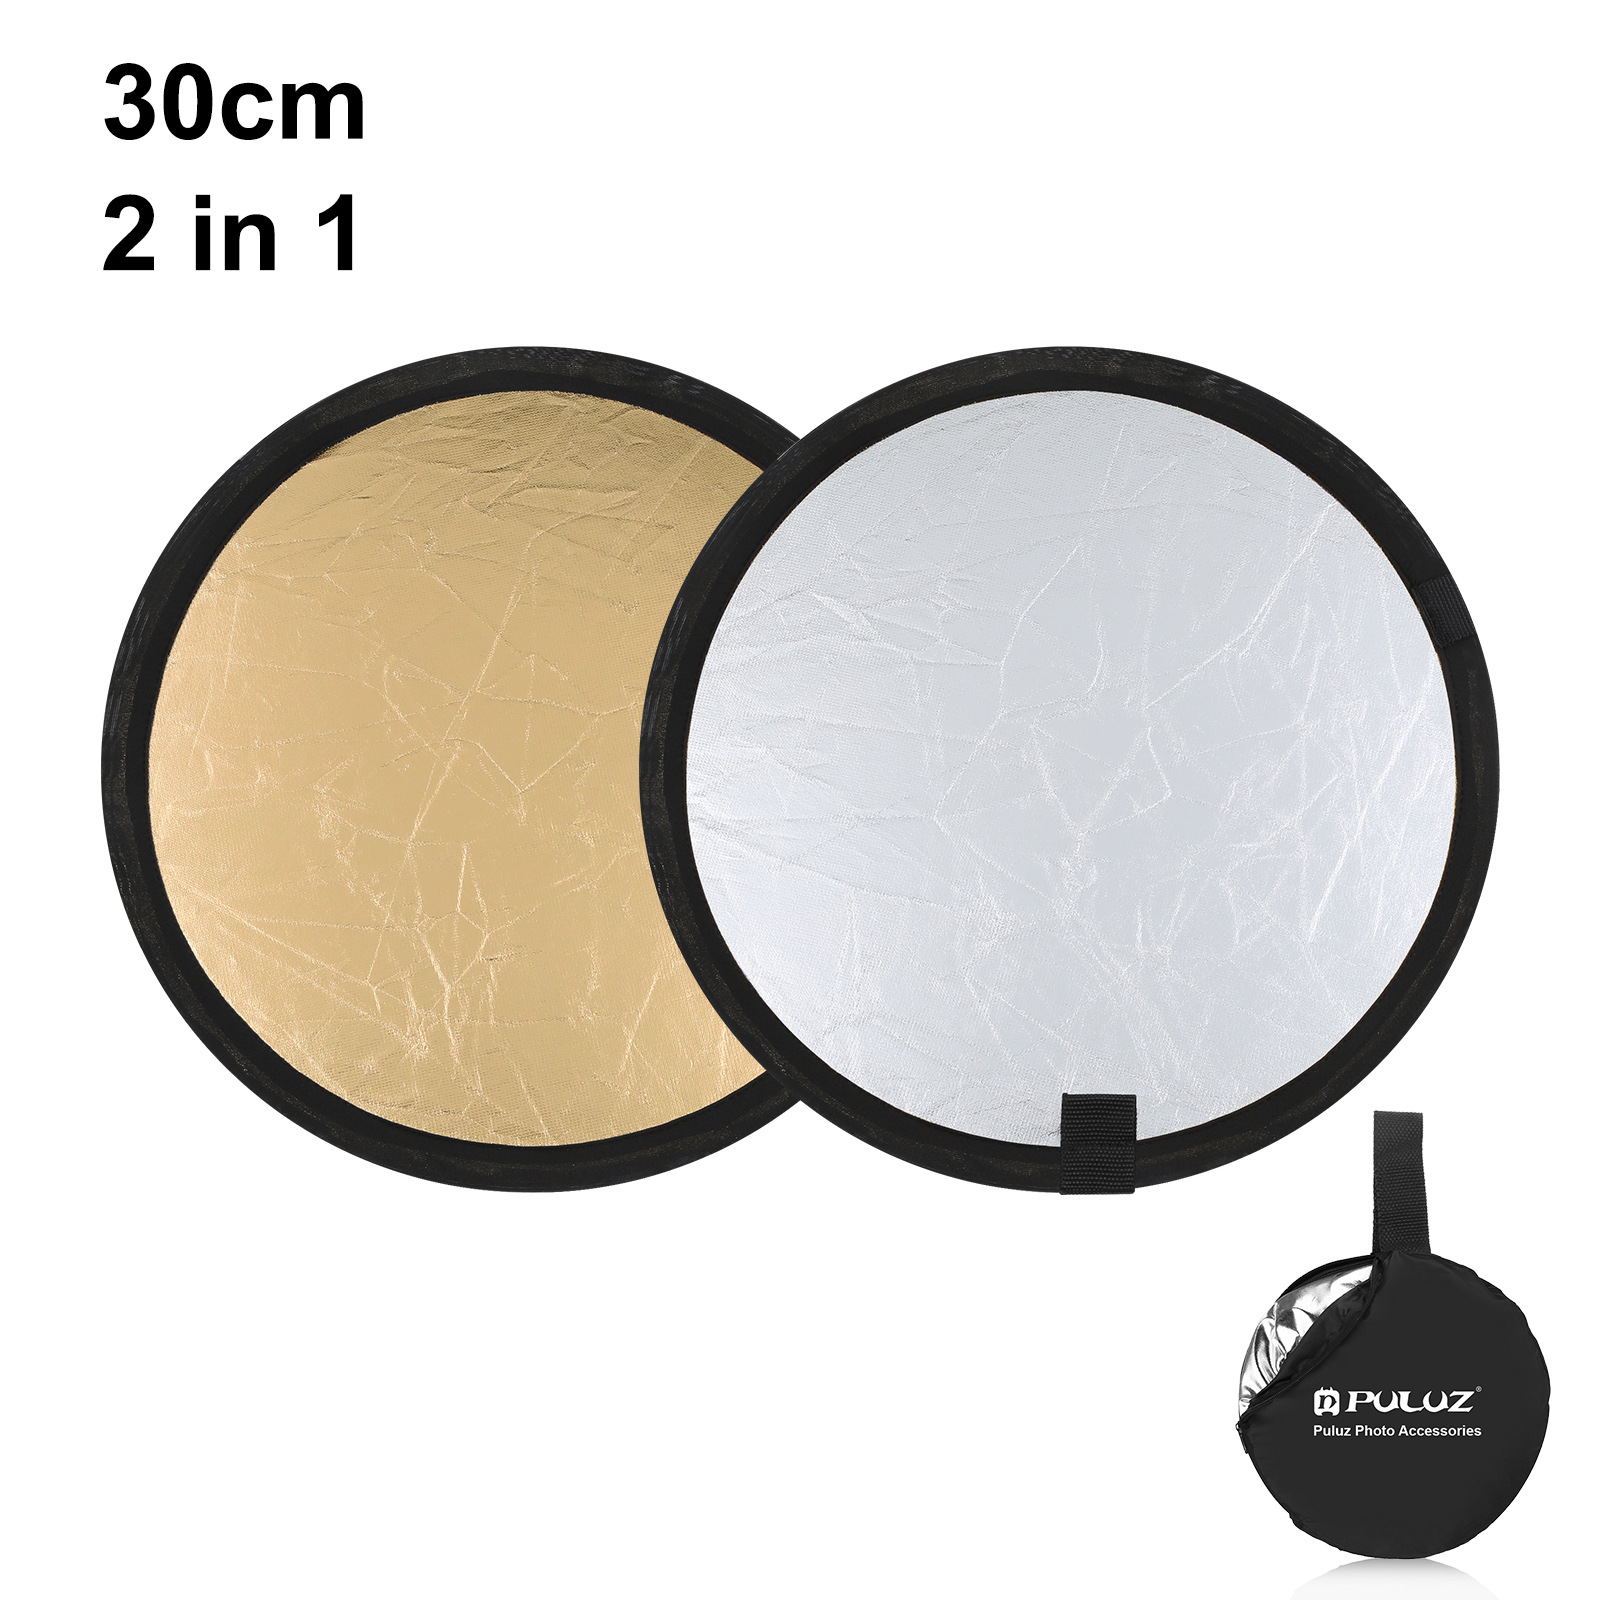 Puluz 30Cm 2 In 1 Zilver/Goud Vouwen Fotostudio Reflector Board